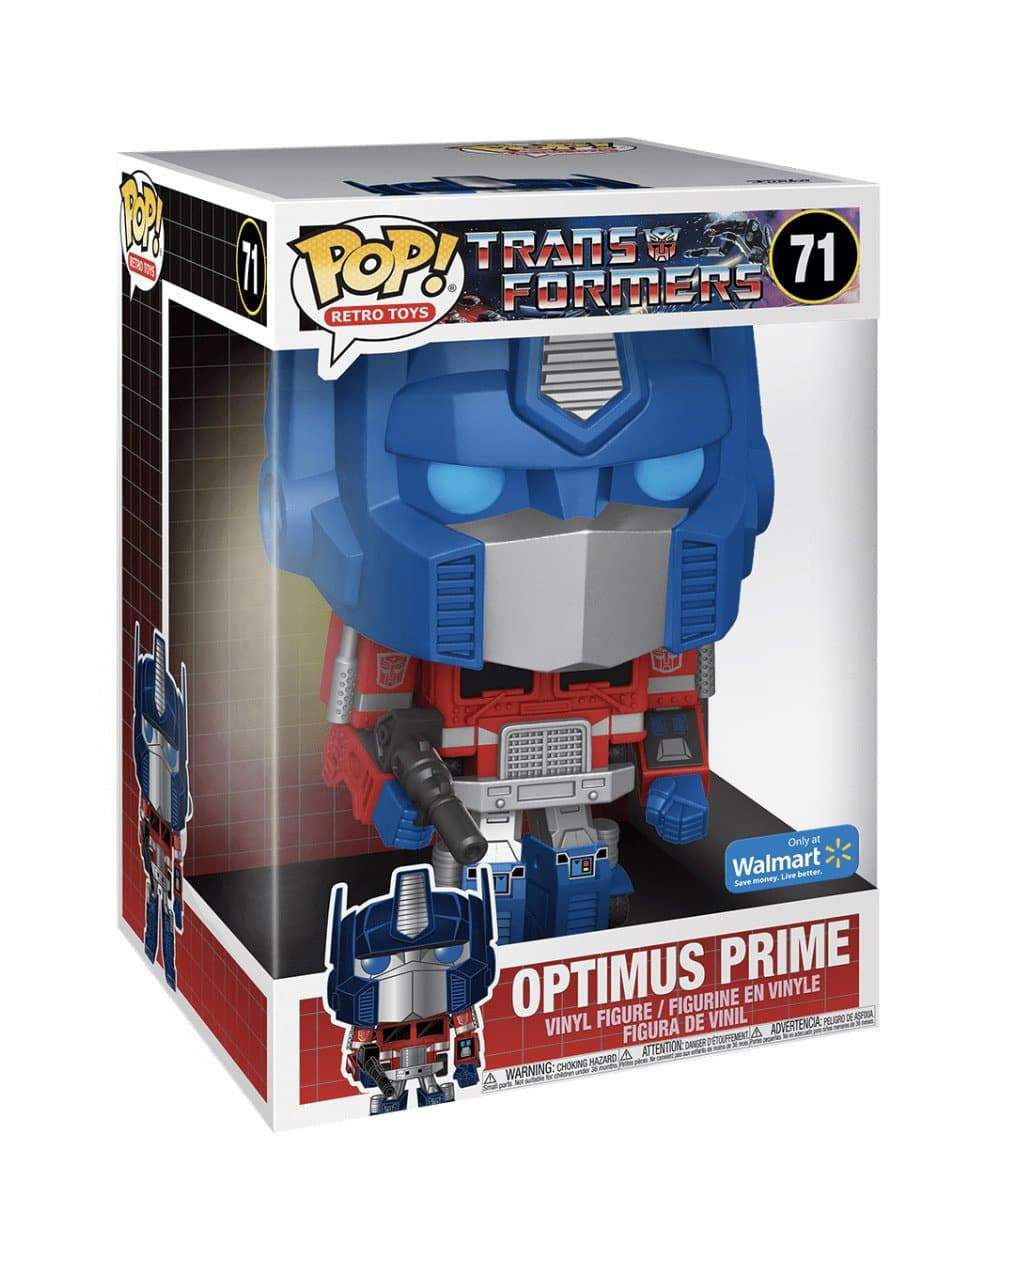 Optimus Prime  #71 Deluxe Funko Pop! Transformers, Walmart Exclusive - Angry Cat